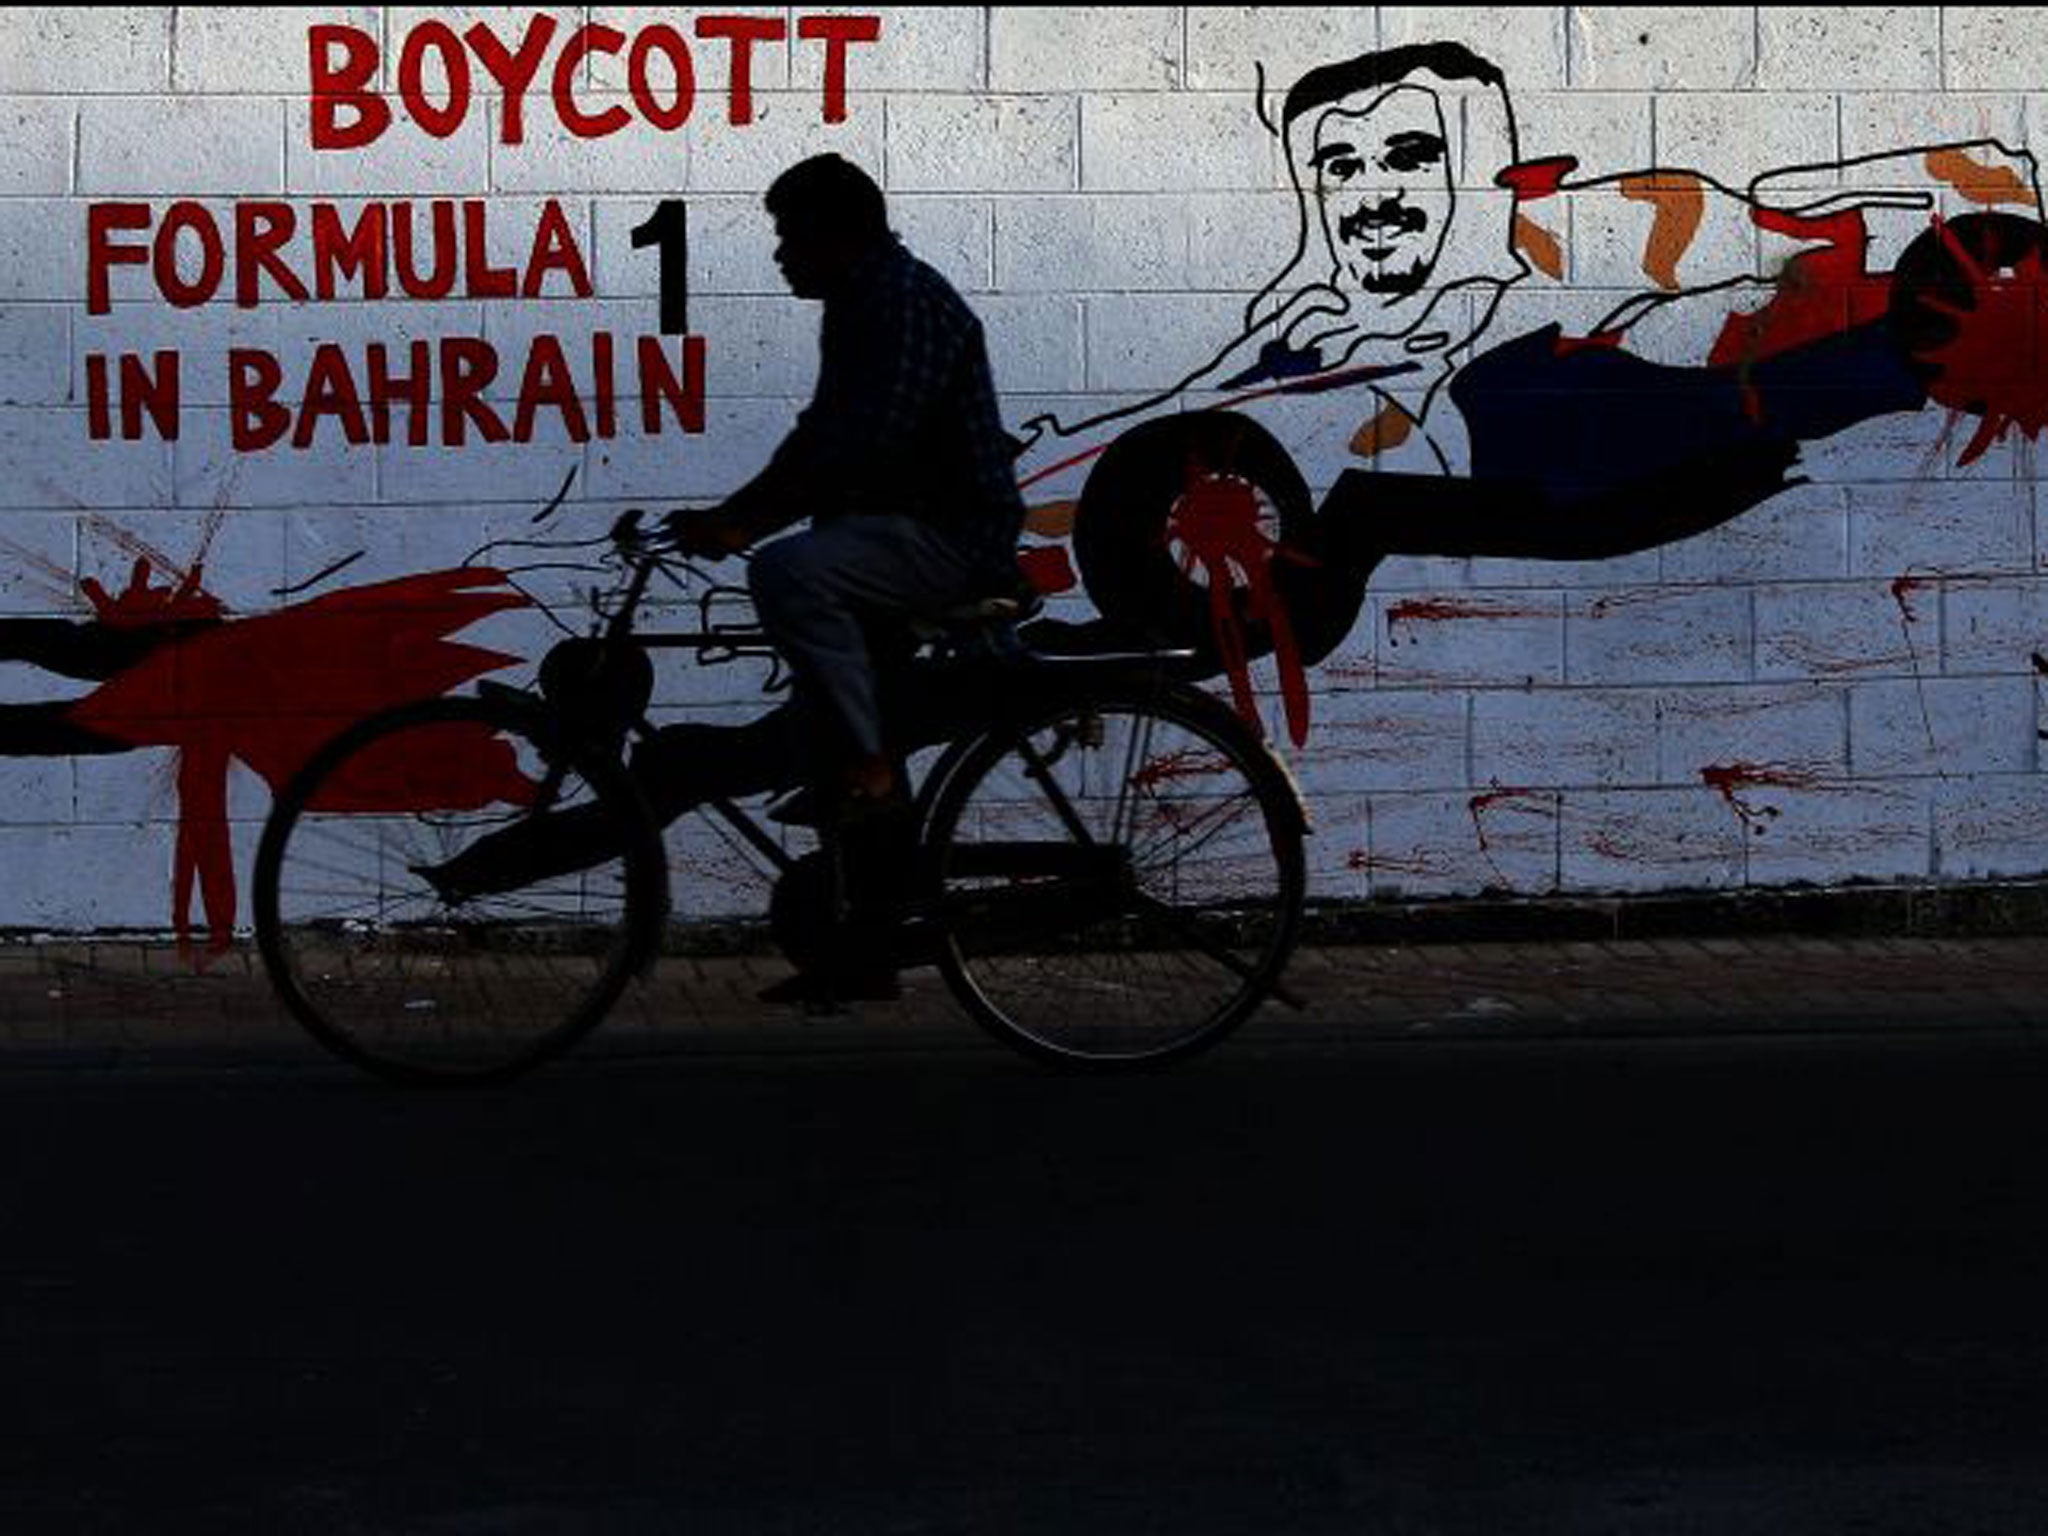 Graffiti in Bharain shows Crown Prince Salman Al Khalifa in a racing car with blood on its wheels